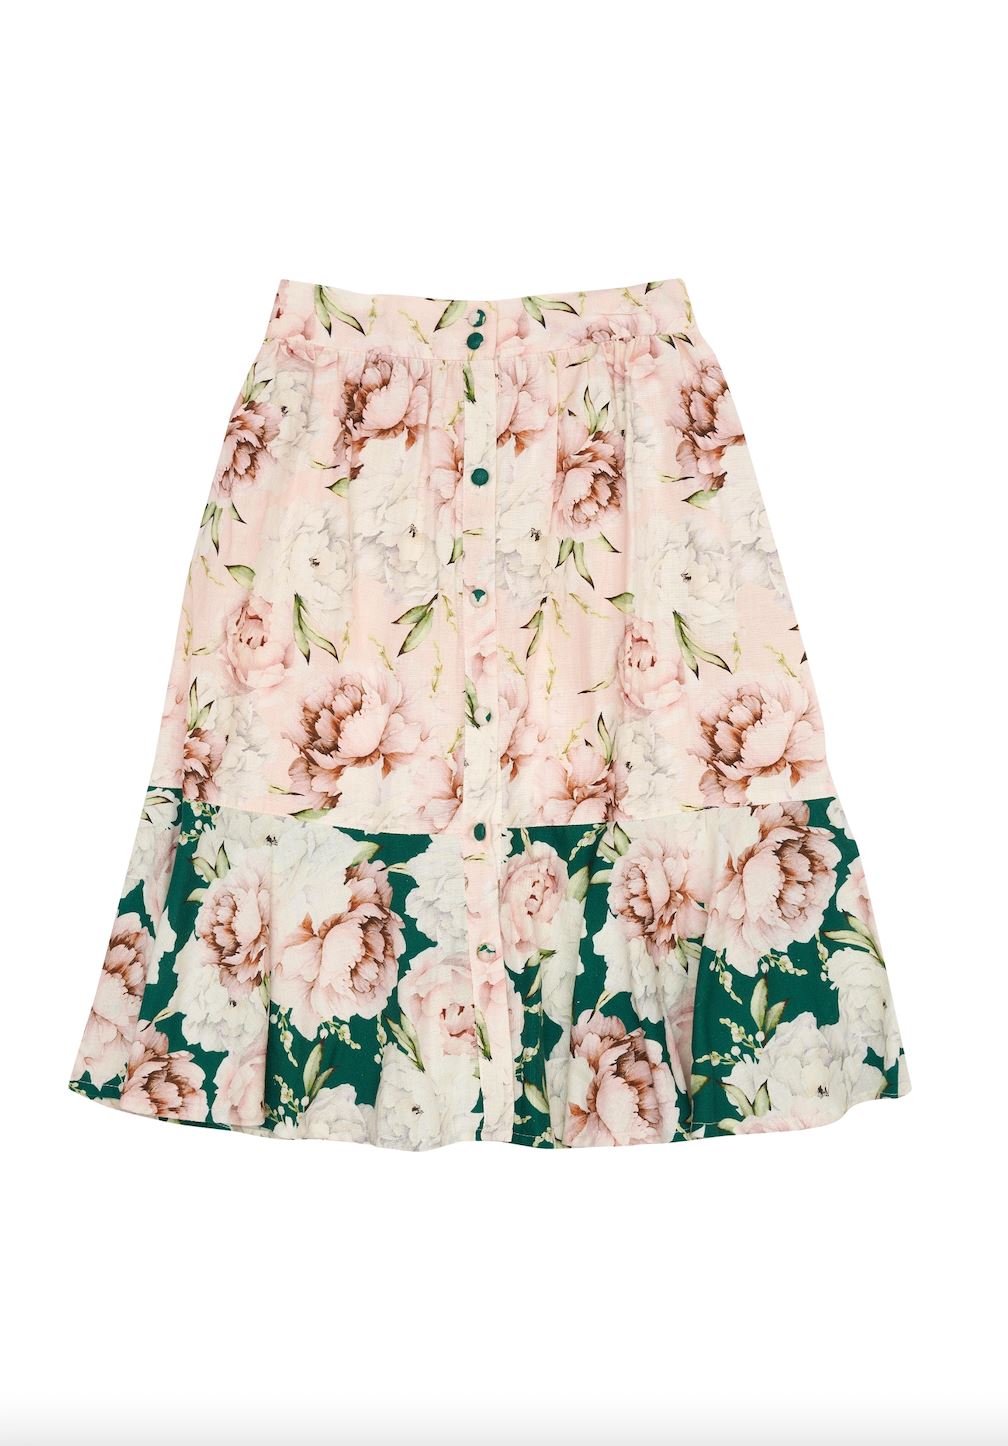 Steph Skirt - Pink Rose Skirt Bella & Lace 